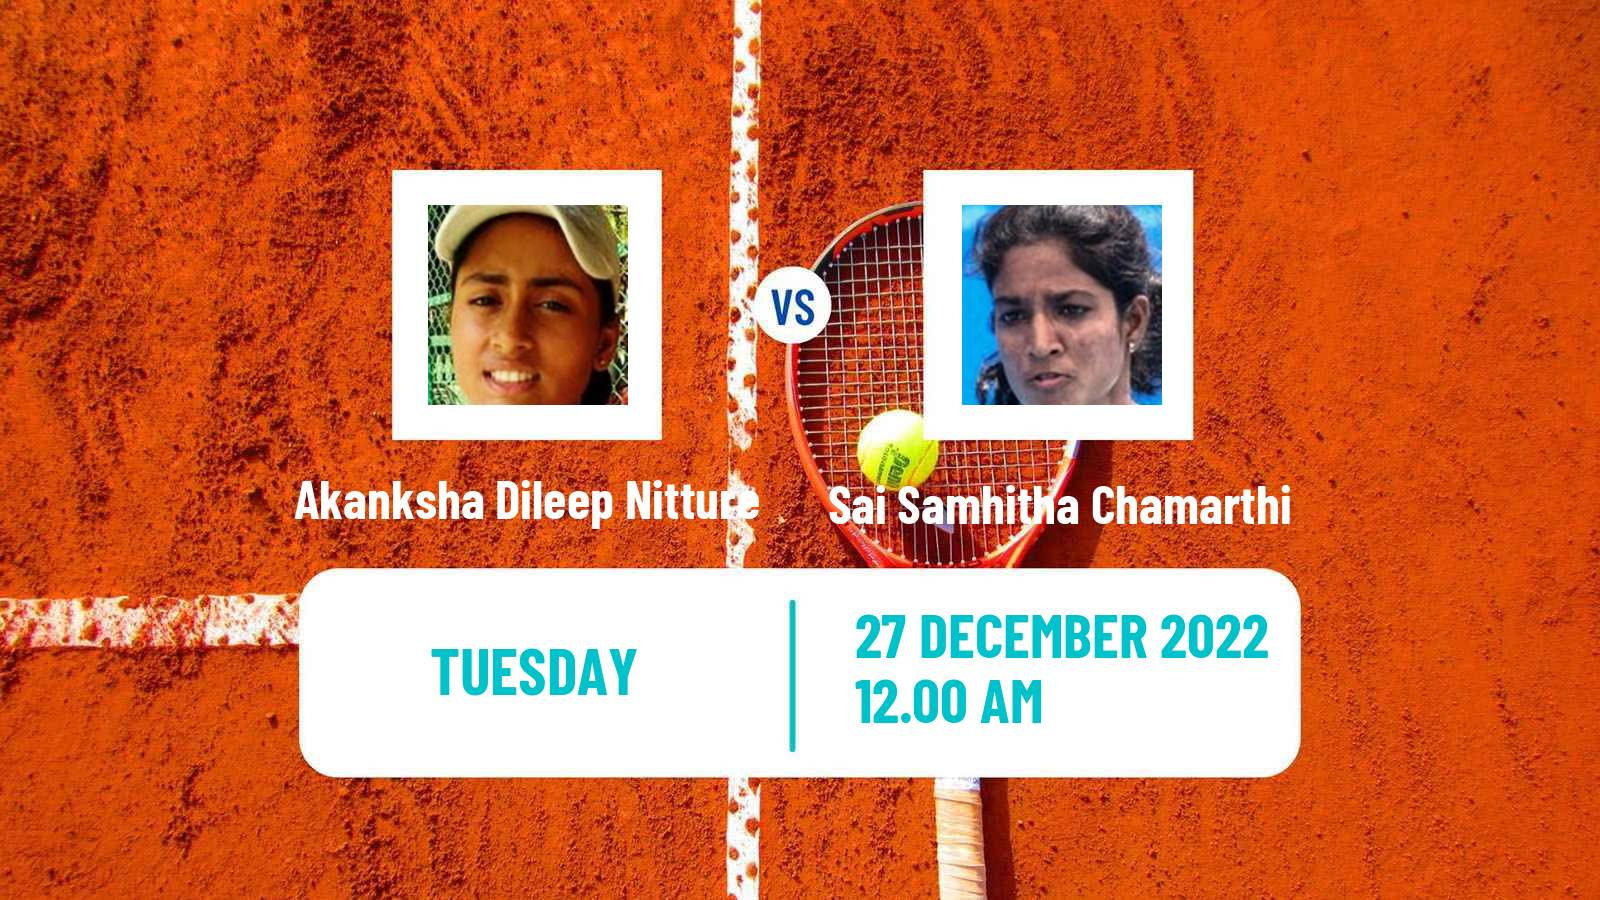 Tennis ITF Tournaments Akanksha Dileep Nitture - Sai Samhitha Chamarthi